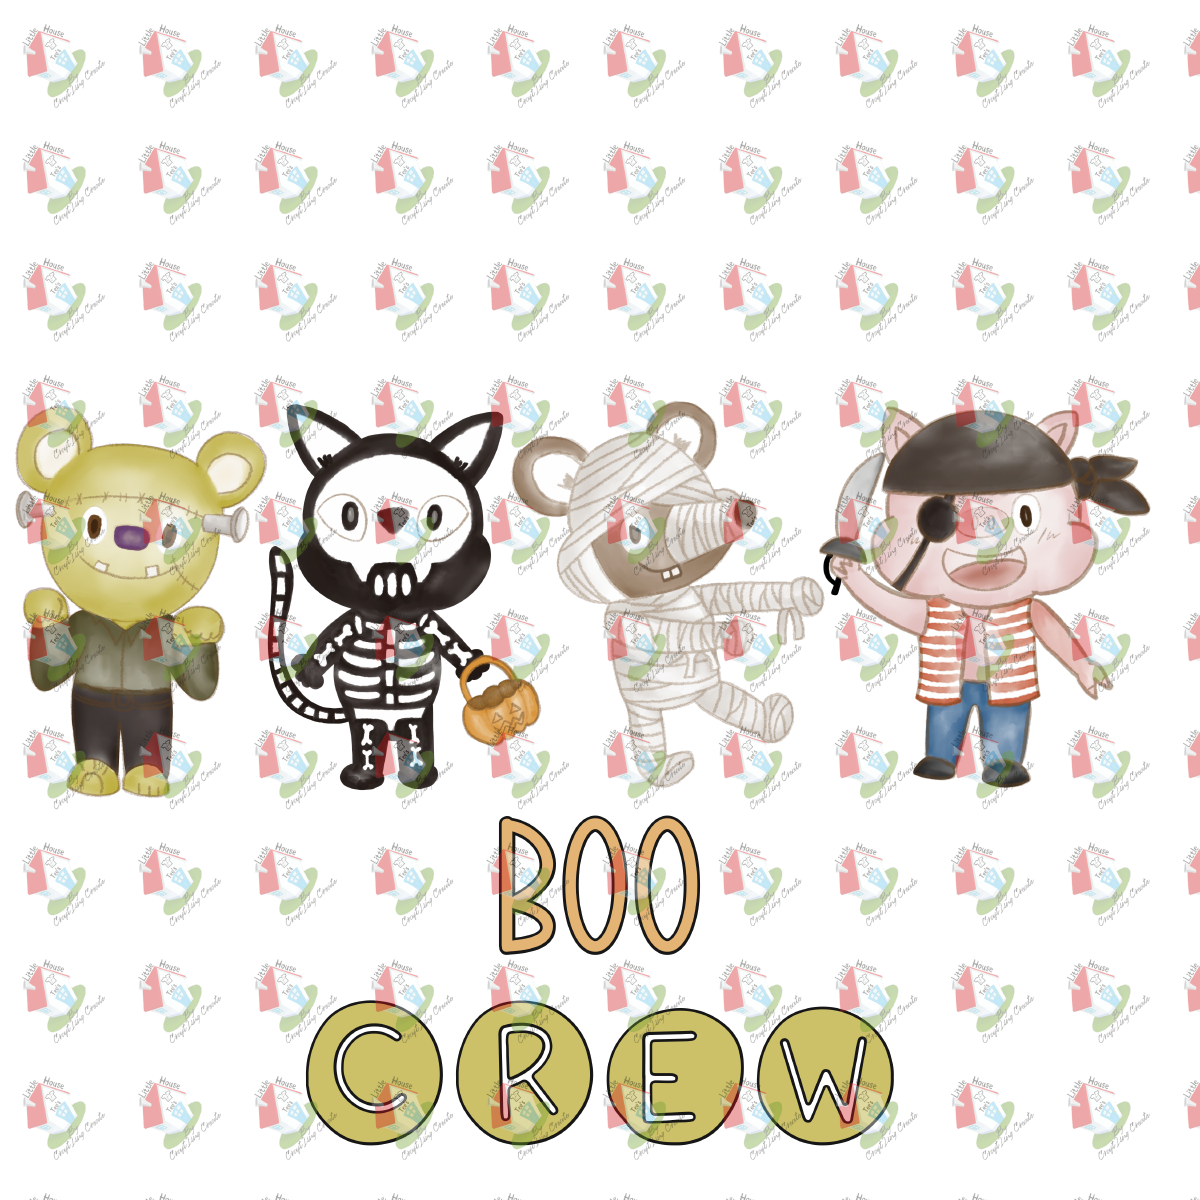 7156 Boo crew